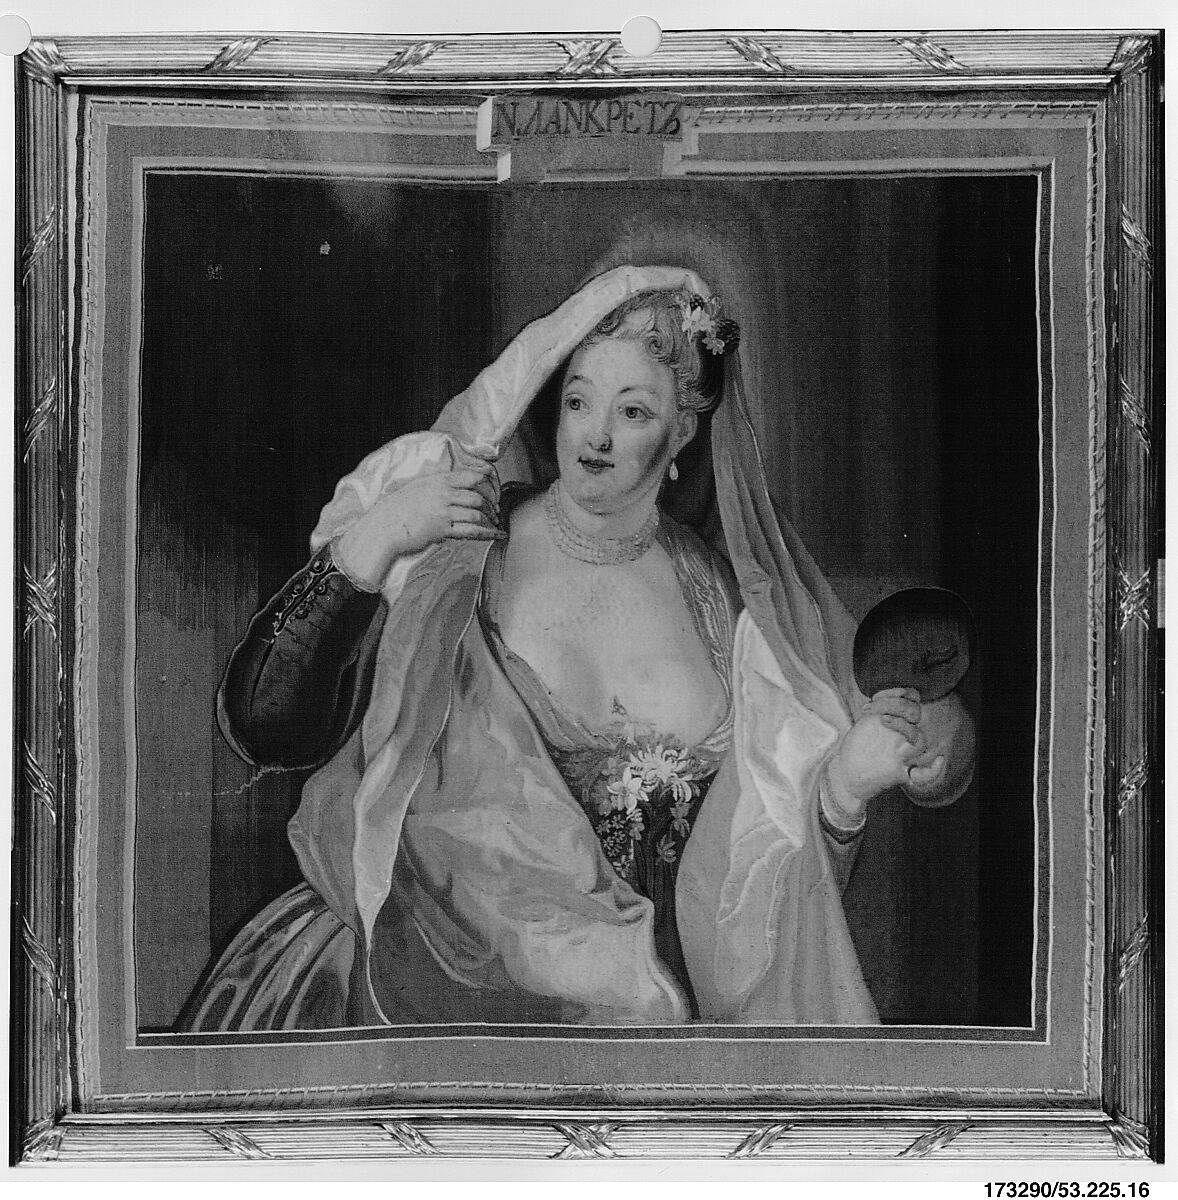 Woman with a Mirror, Imperial Russian Tapestry Manufactory, Saint Petersburg, Wool, metal thread (20-25 warps per inch, 8-10 per cm.), Russian, St. Petersburg 